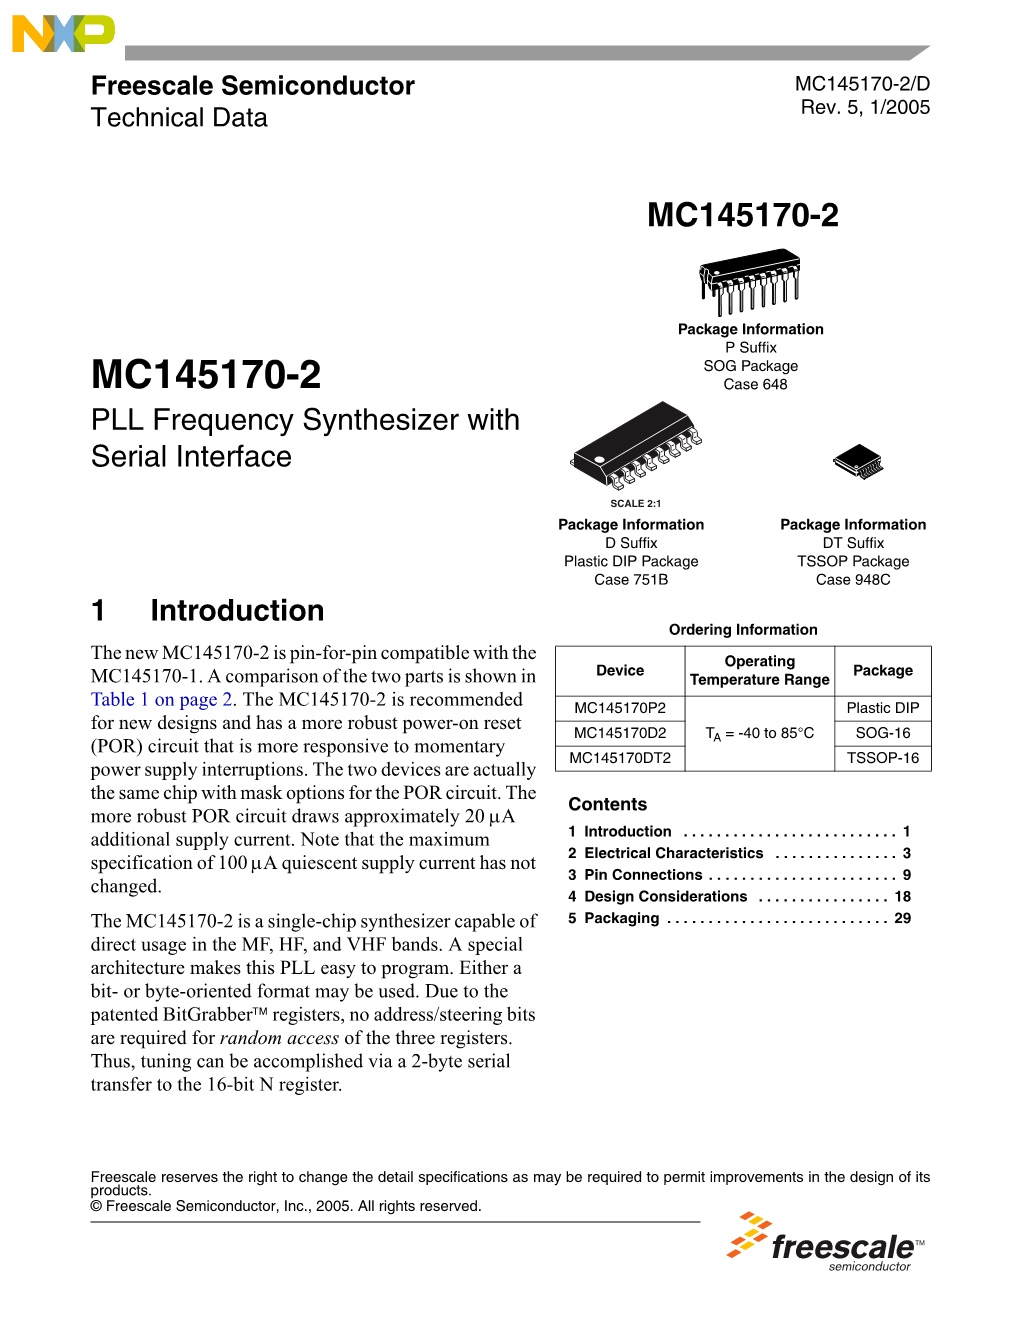 MC145170-2/D Technical Data Rev